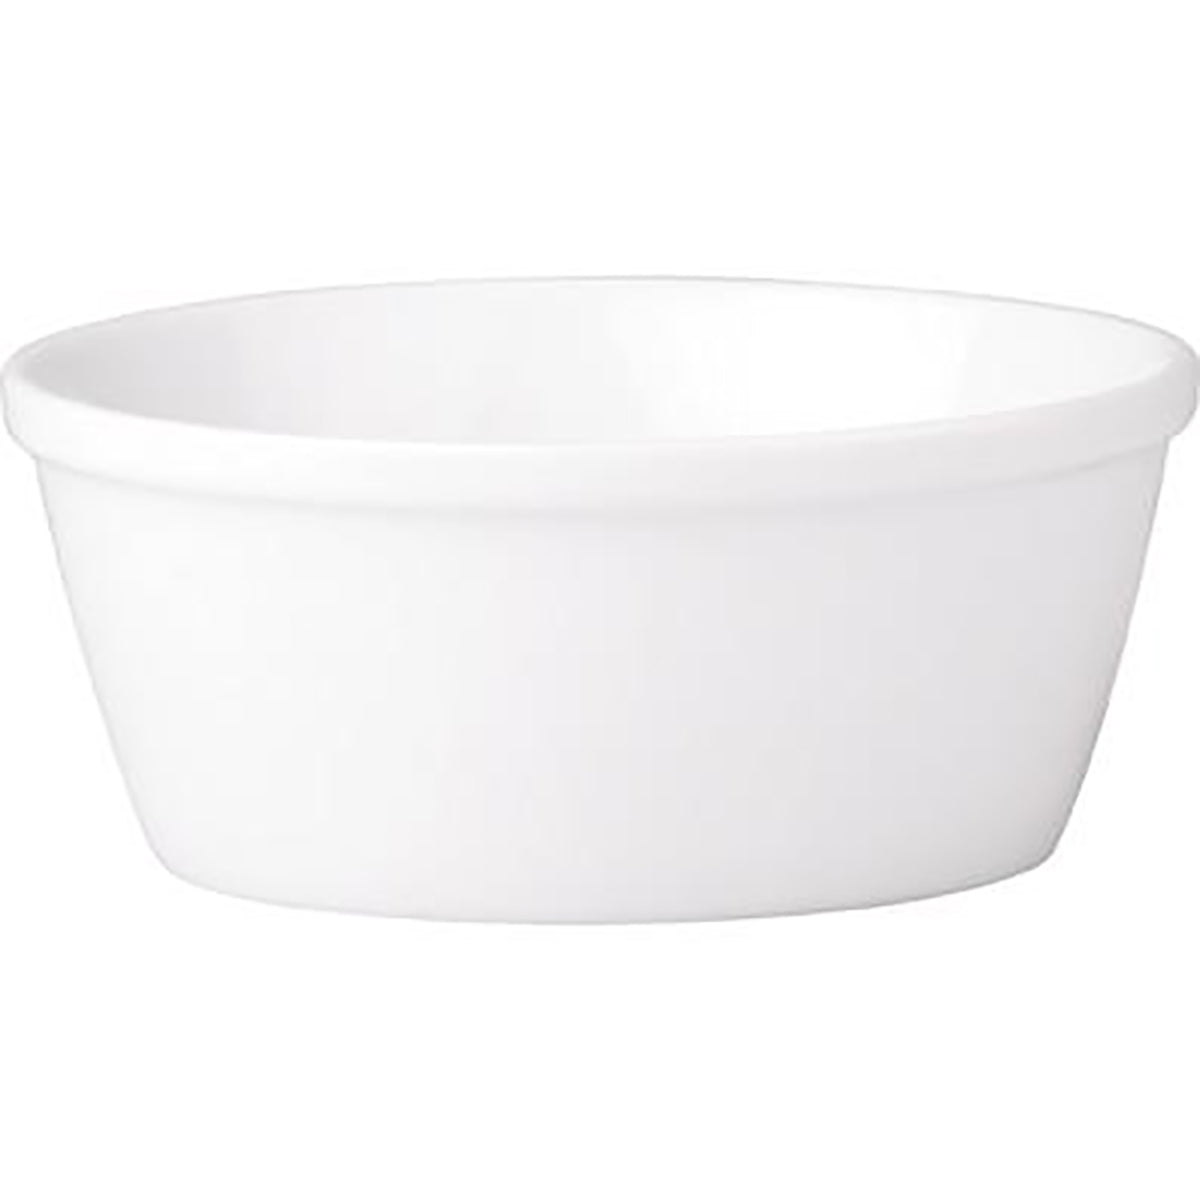 94306 Royal Porcelain Chelsea Salad Bowl Tapered Sides 130mm (0313) Tomkin Australia Hospitality Supplies